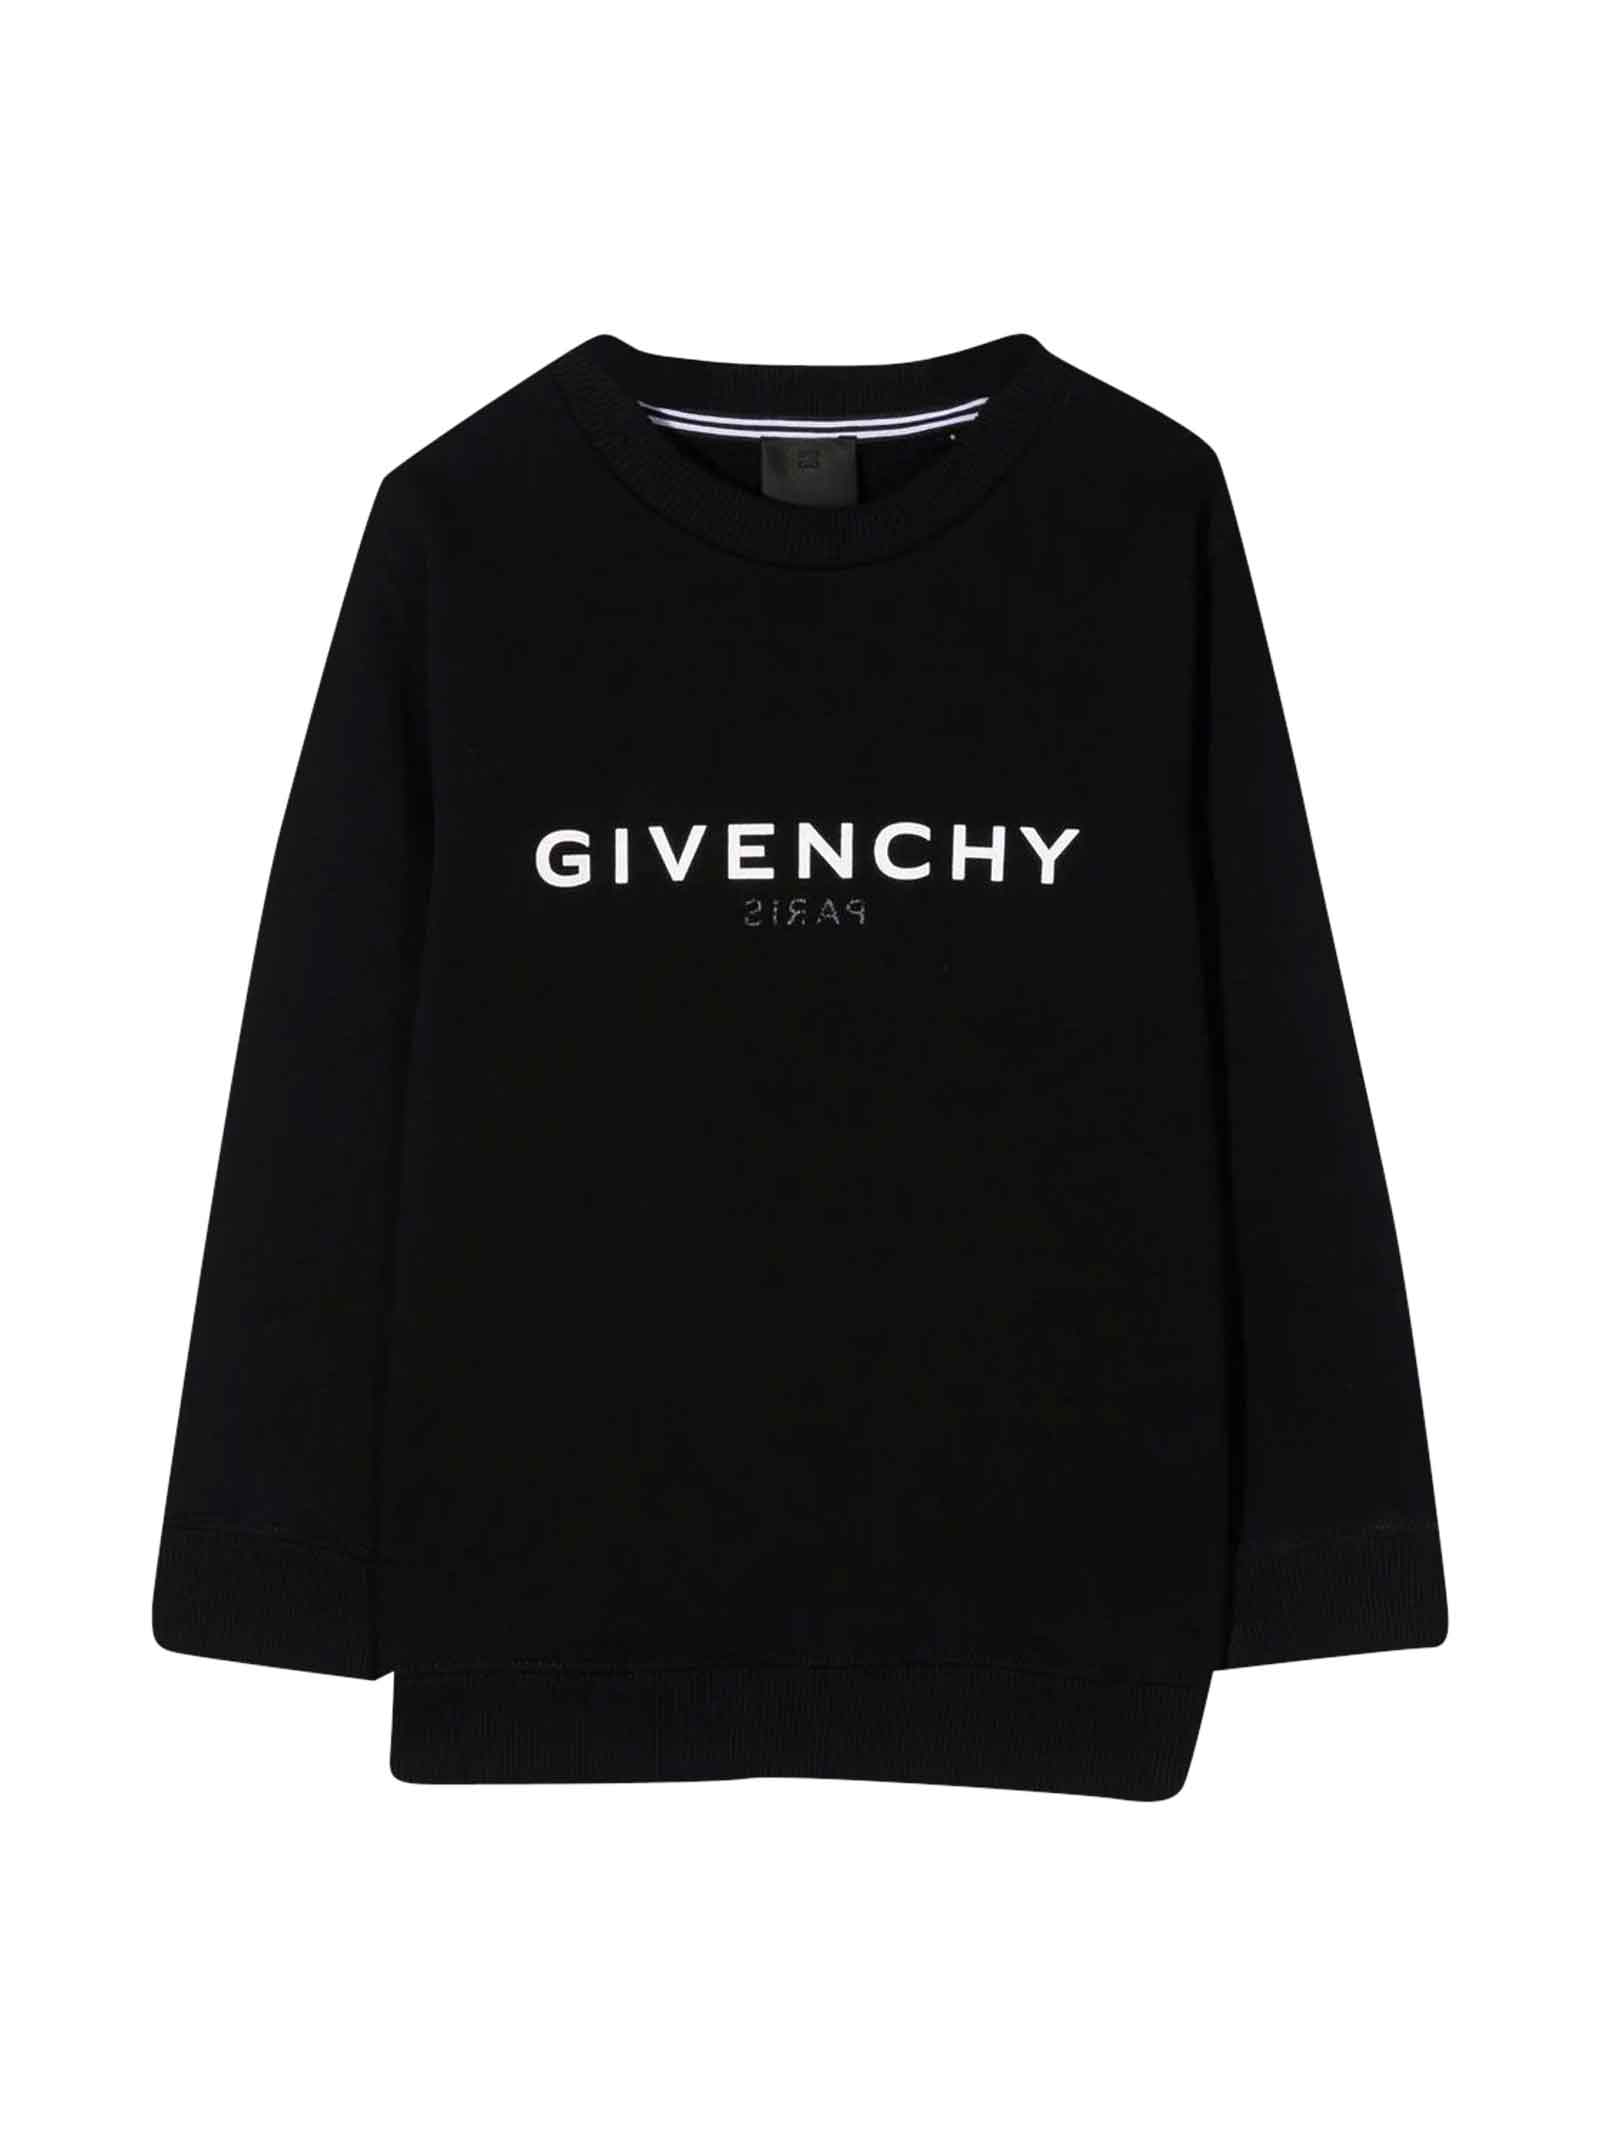 Givenchy Black Sweatshirt With White Logo